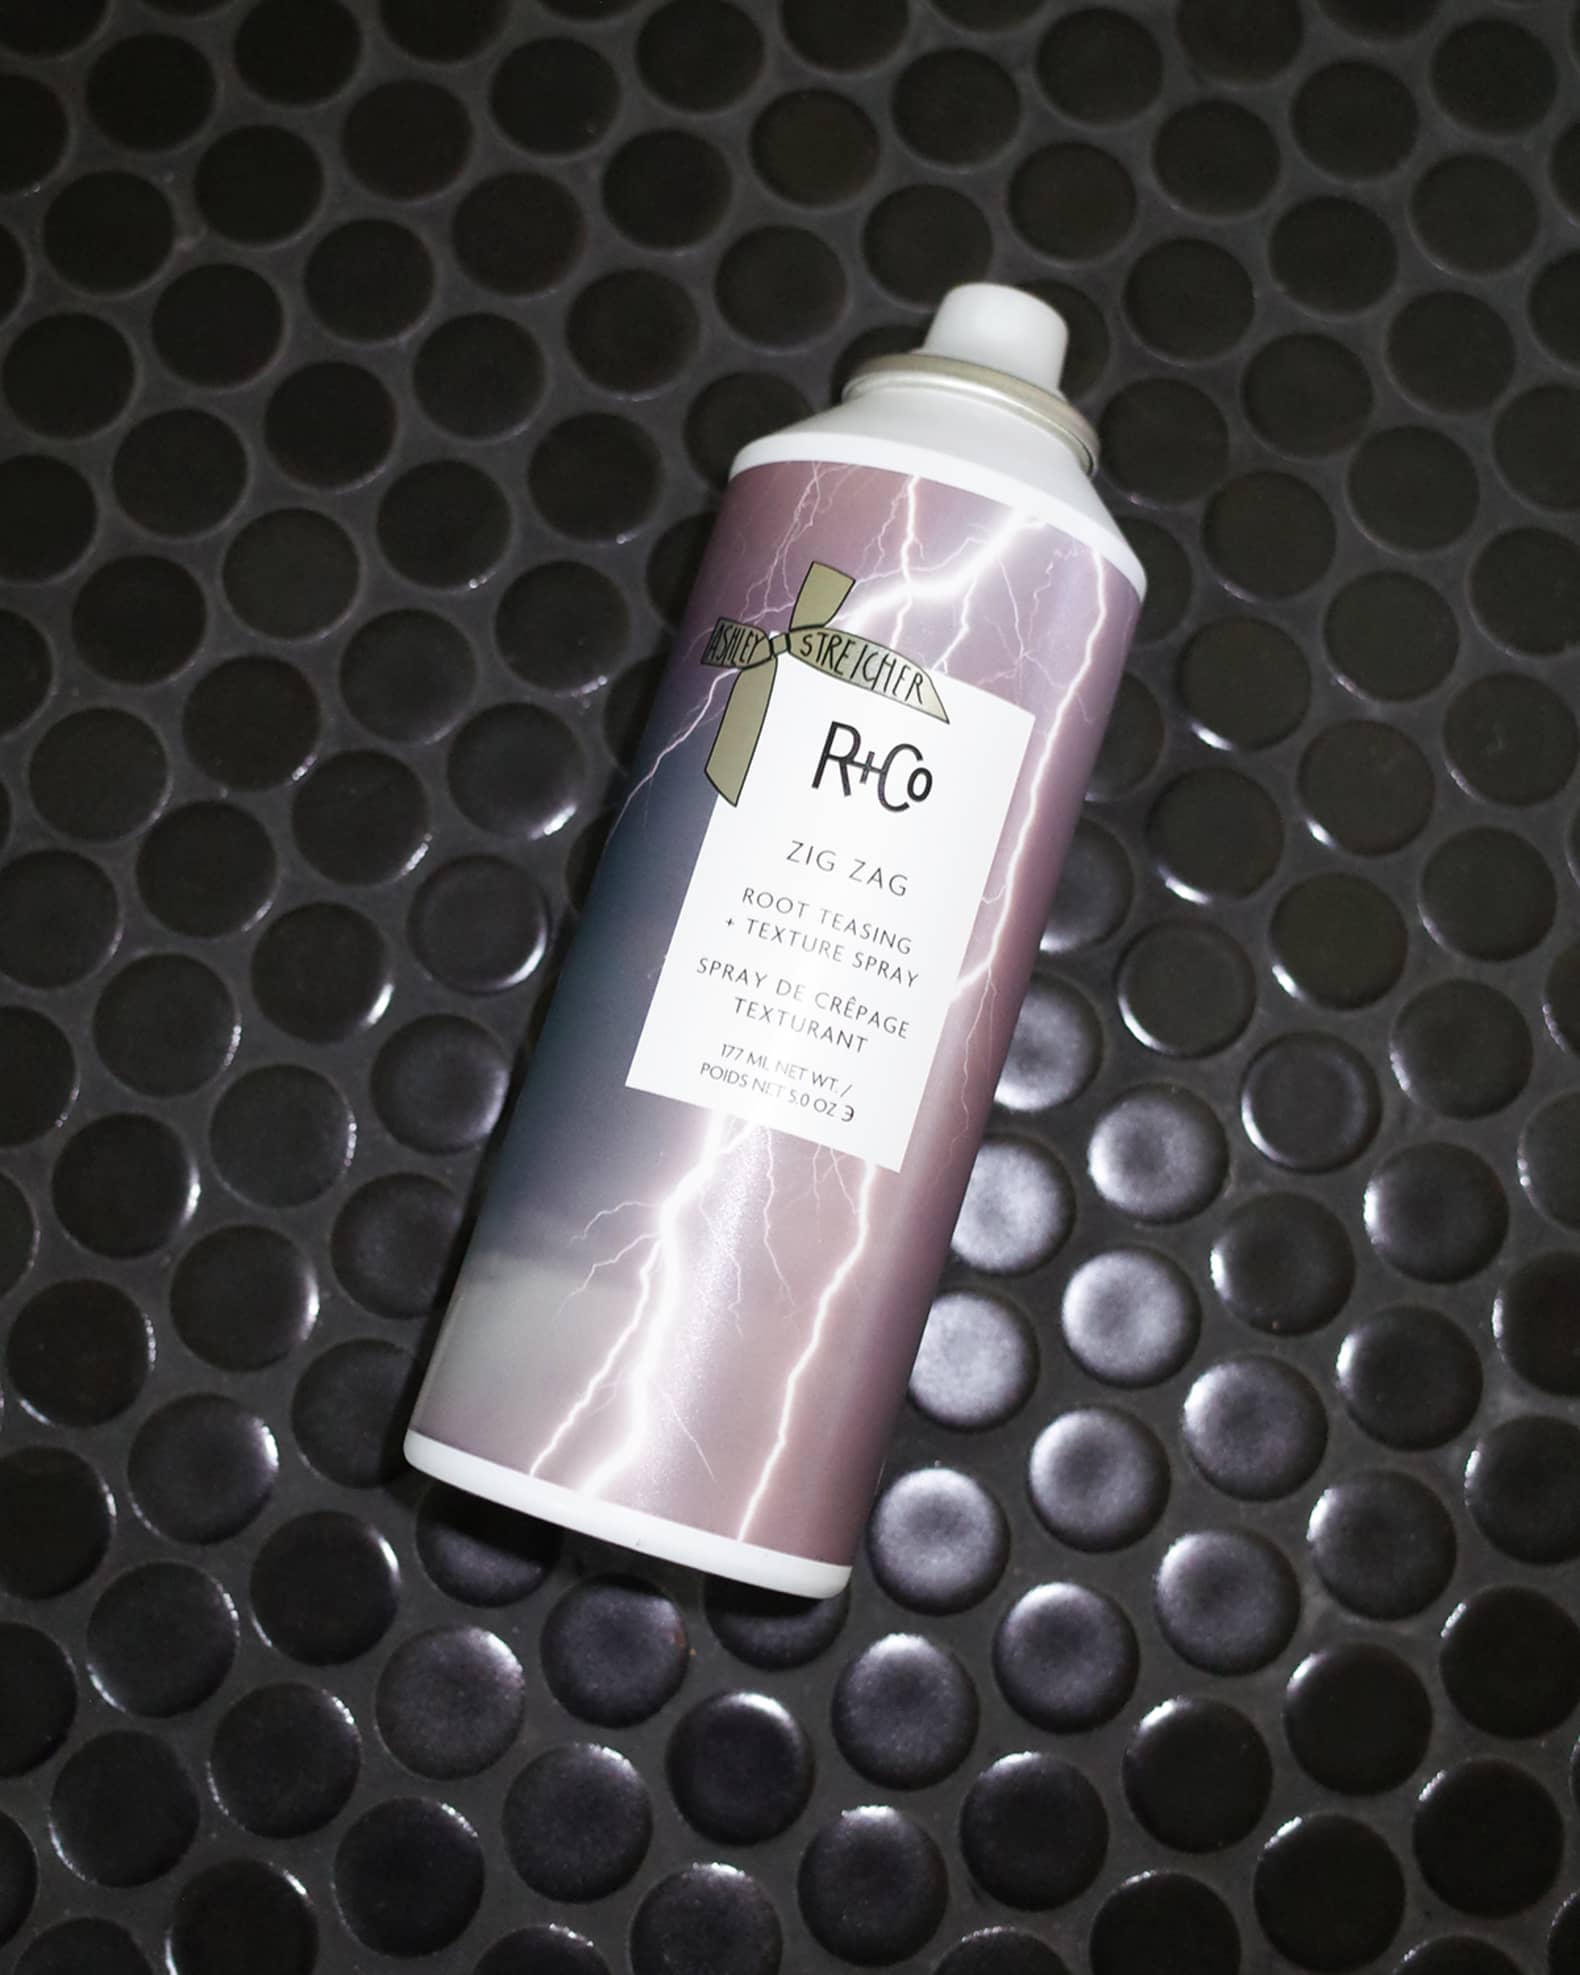 R+Co - Zig Zag Root Teasing + Texture Spray